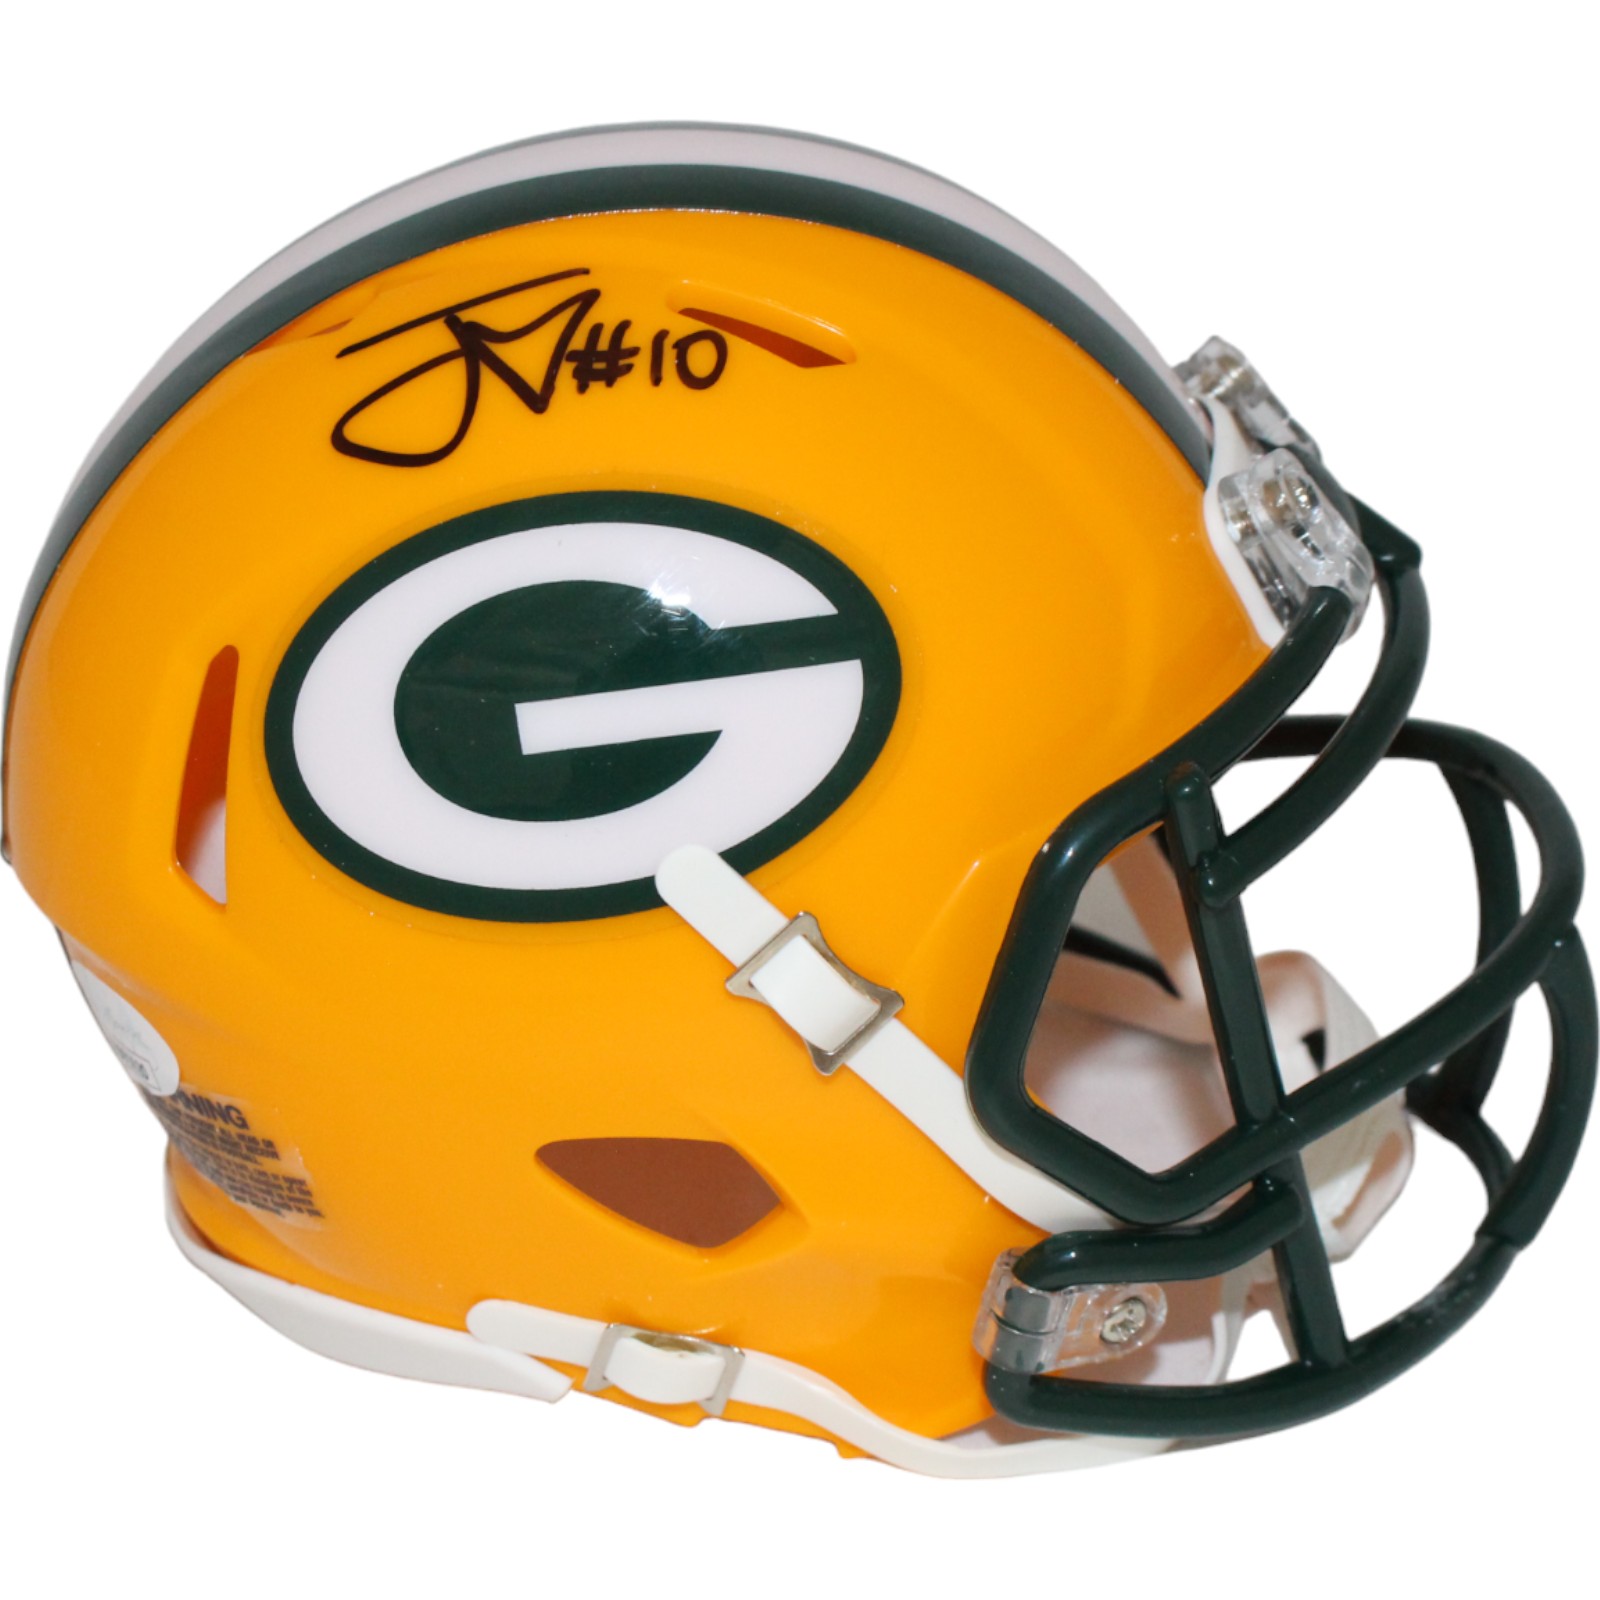 Jordan Love Autographed/Signed Green Bay Packers Mini Helmet JSA